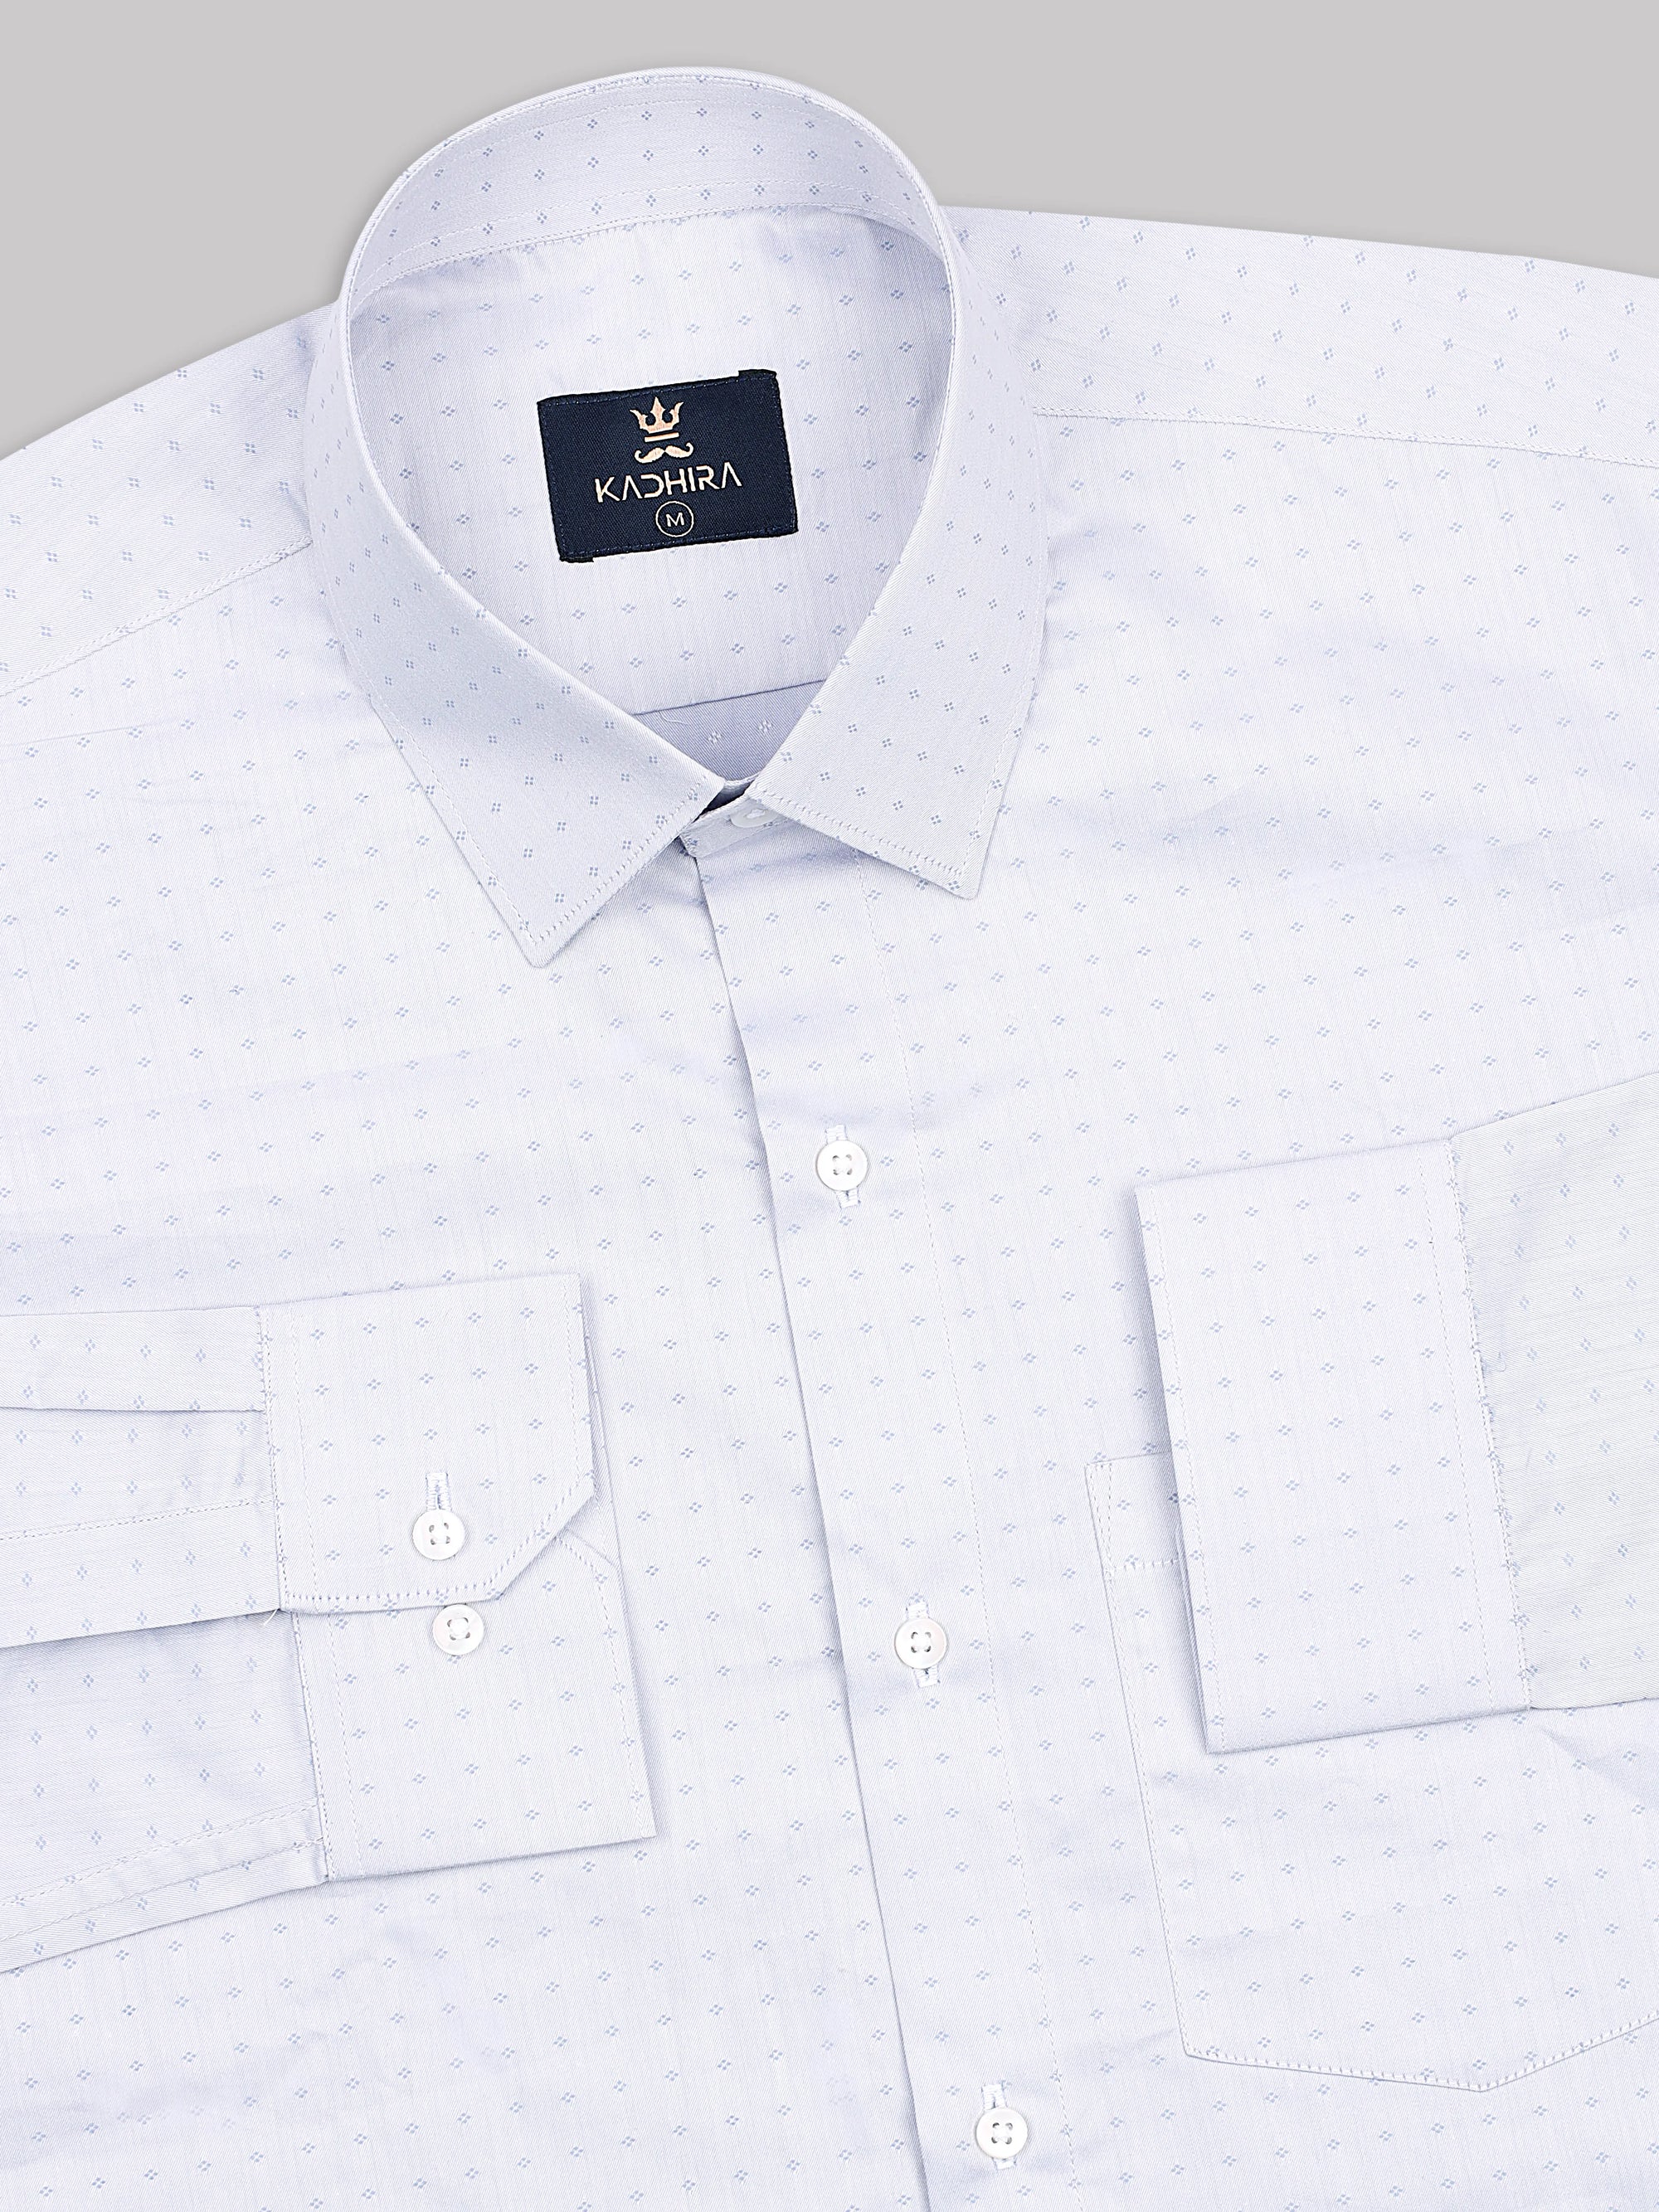 Platinum White Dobby Textured Jacquard Cotton Shirt